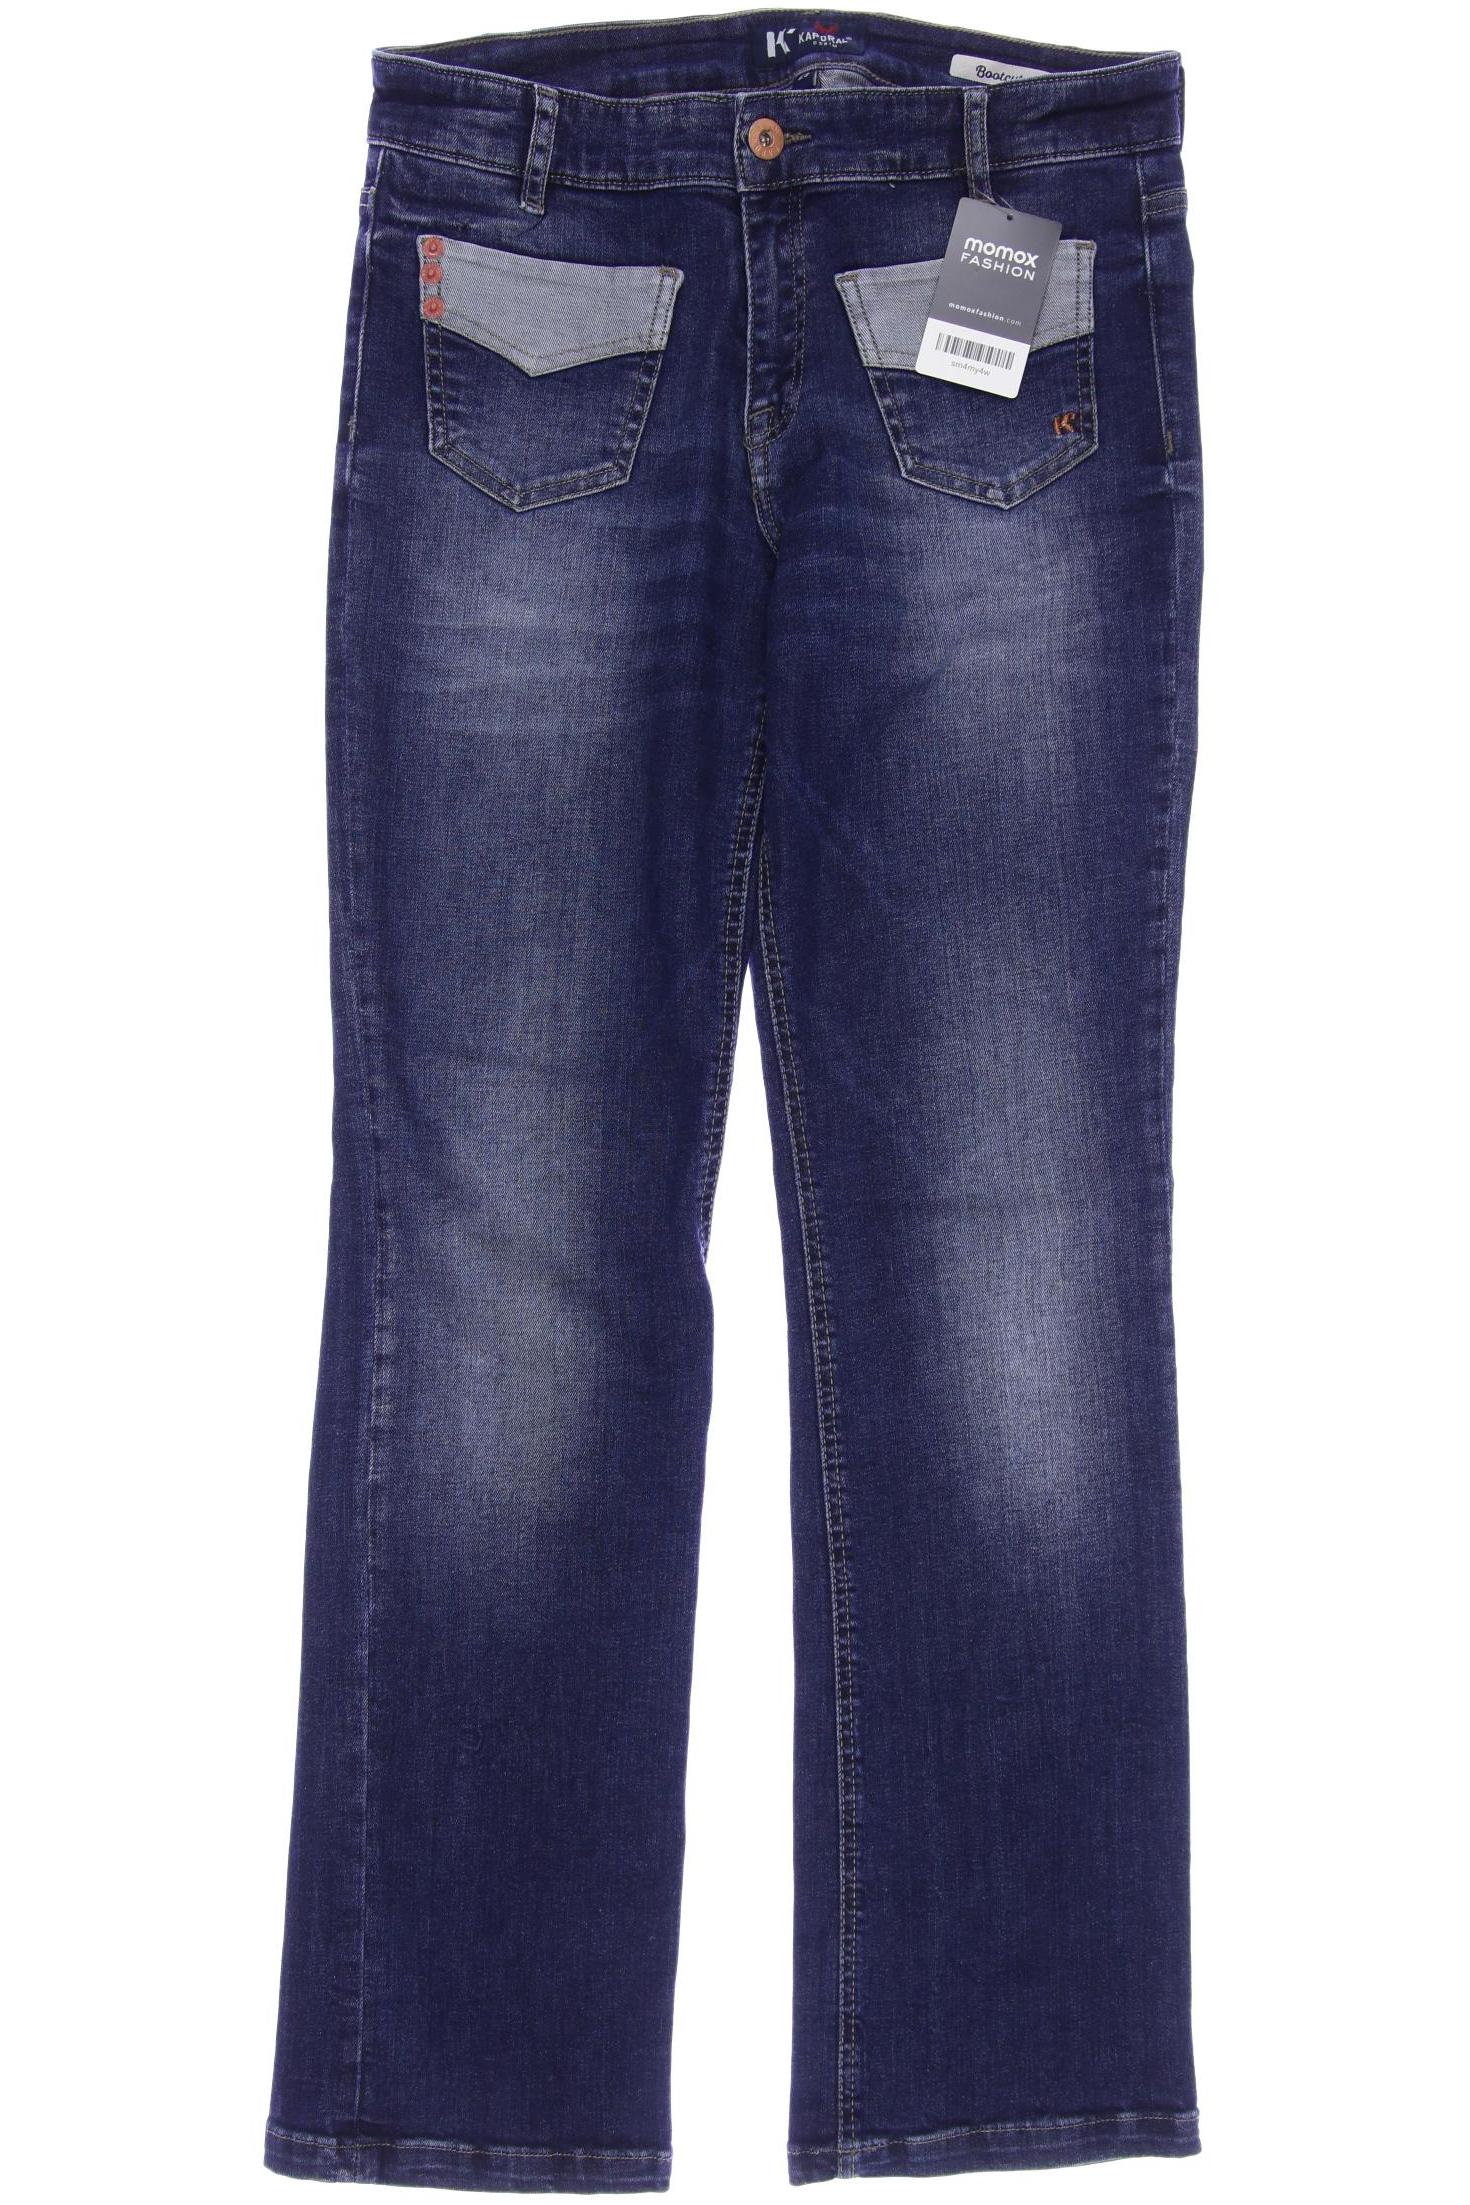 Kaporal Damen Jeans, marineblau von Kaporal